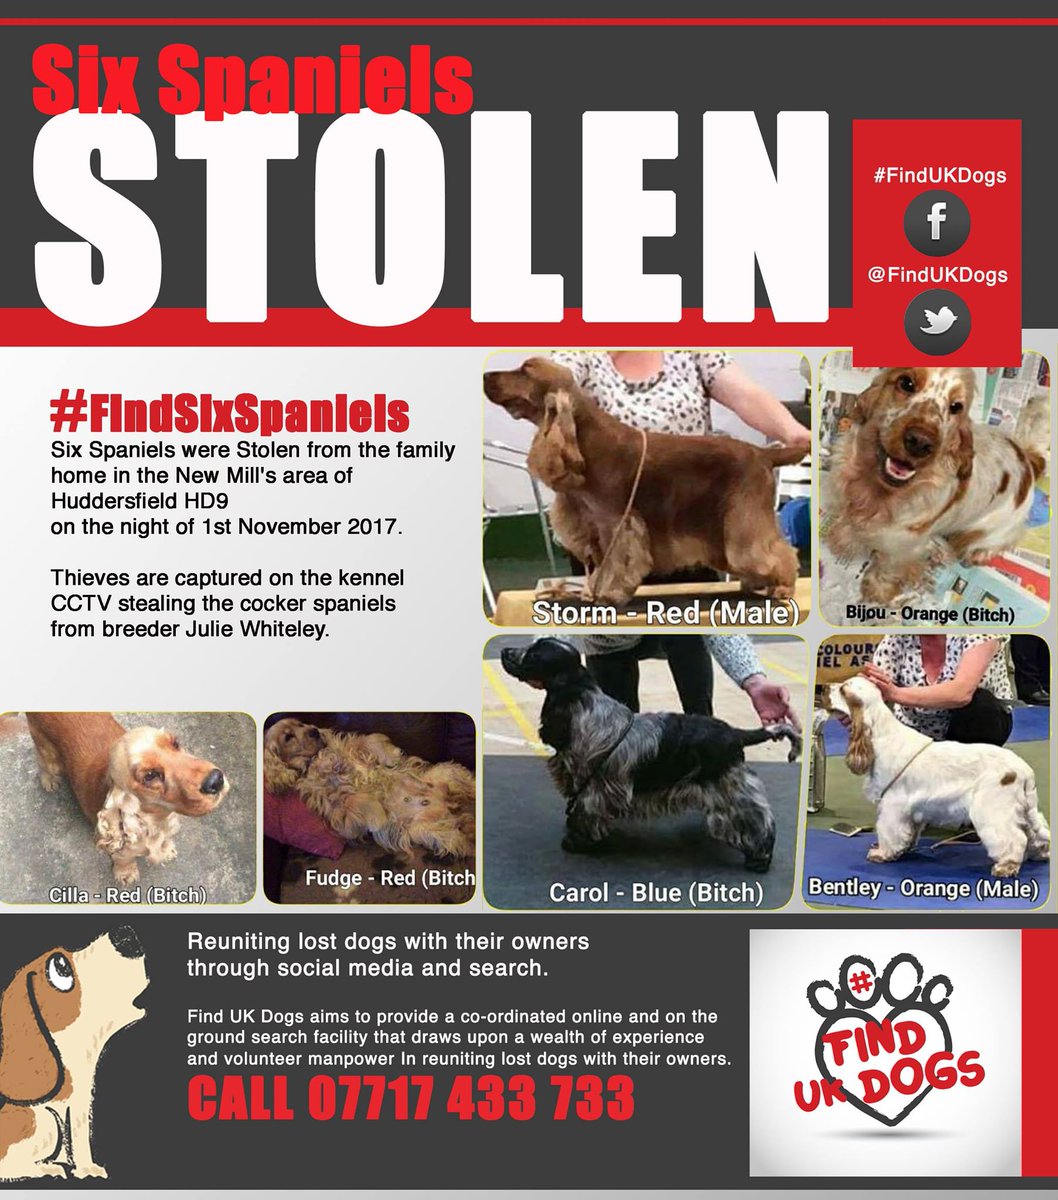 Pls RT #Findsixspaniels STOLEN #Huddersfield Thieves seen on CCTV PLS RT TY. @SnowCalmth @BlessedAtWorld @FernVillaDogs @RSPCA_official @DogsTrust @KyBunnies